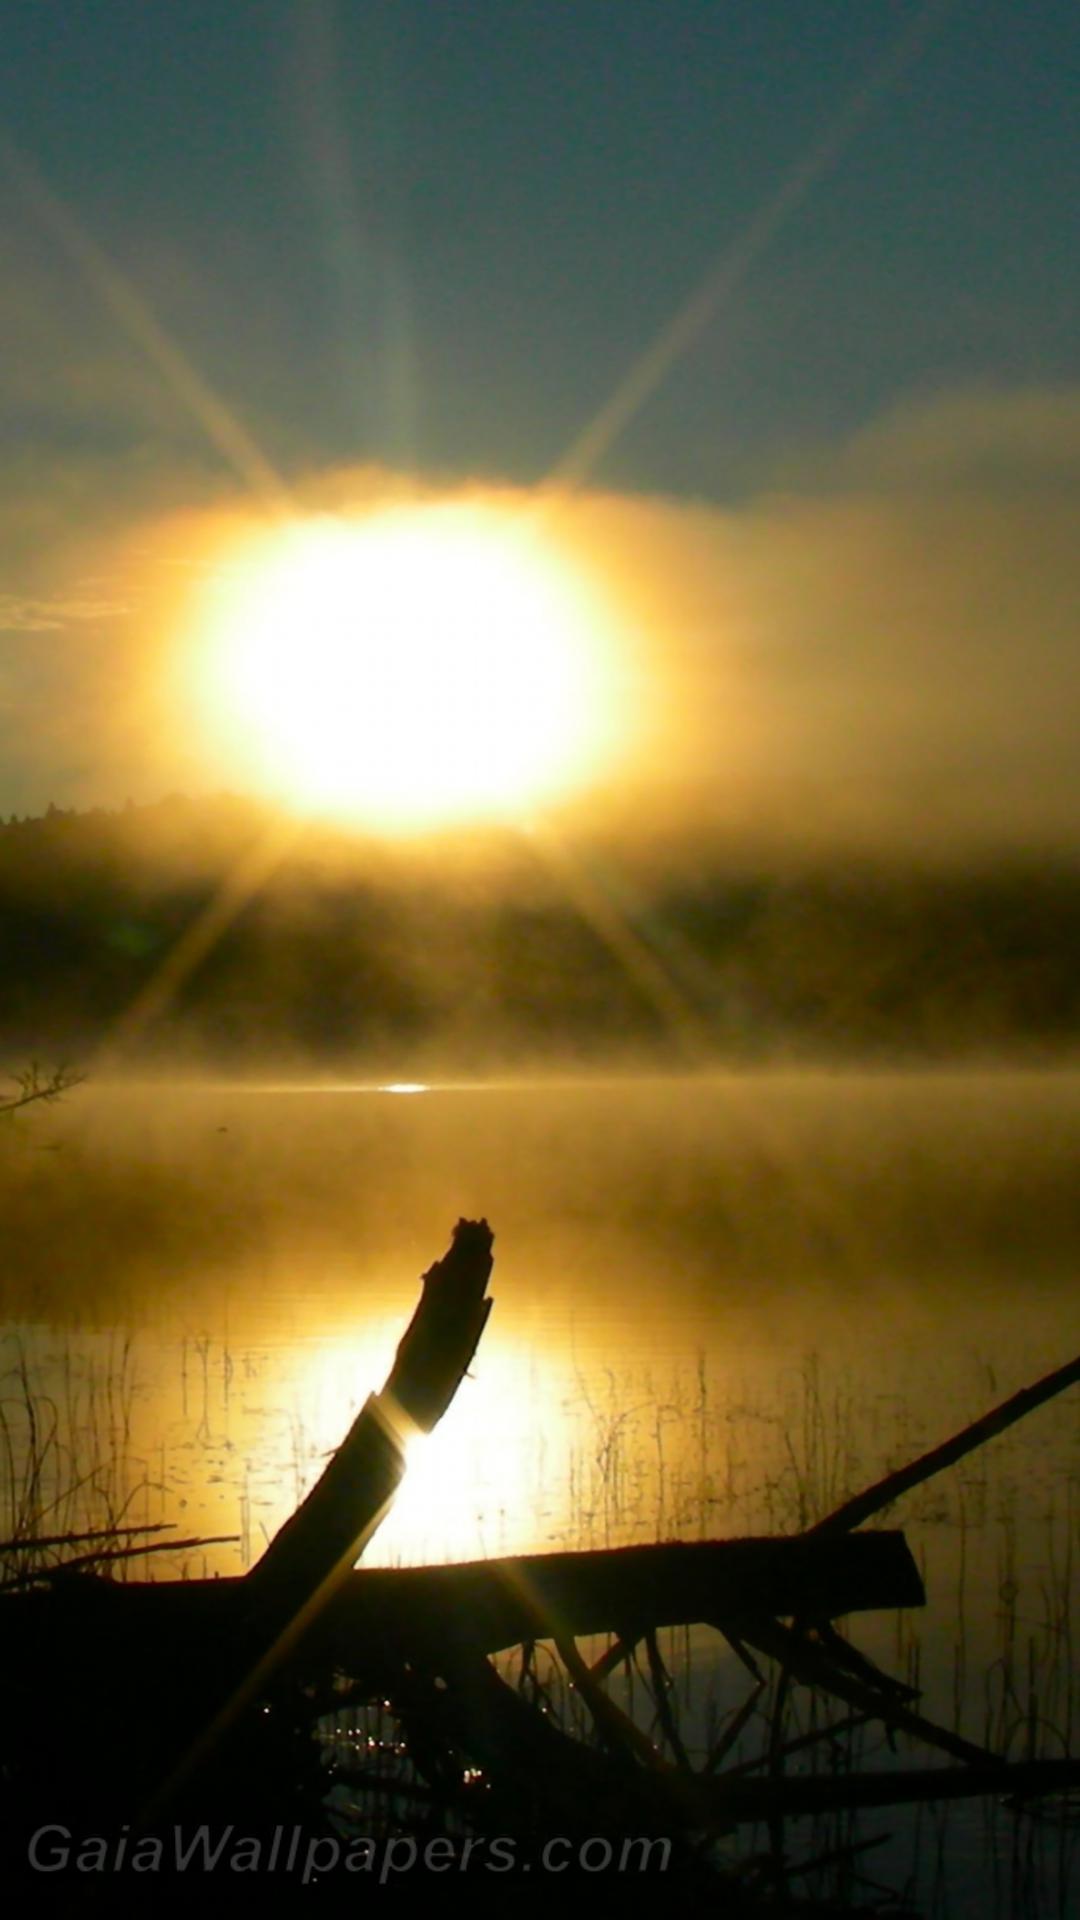 Sunrise through the misty lake - Free desktop wallpapers